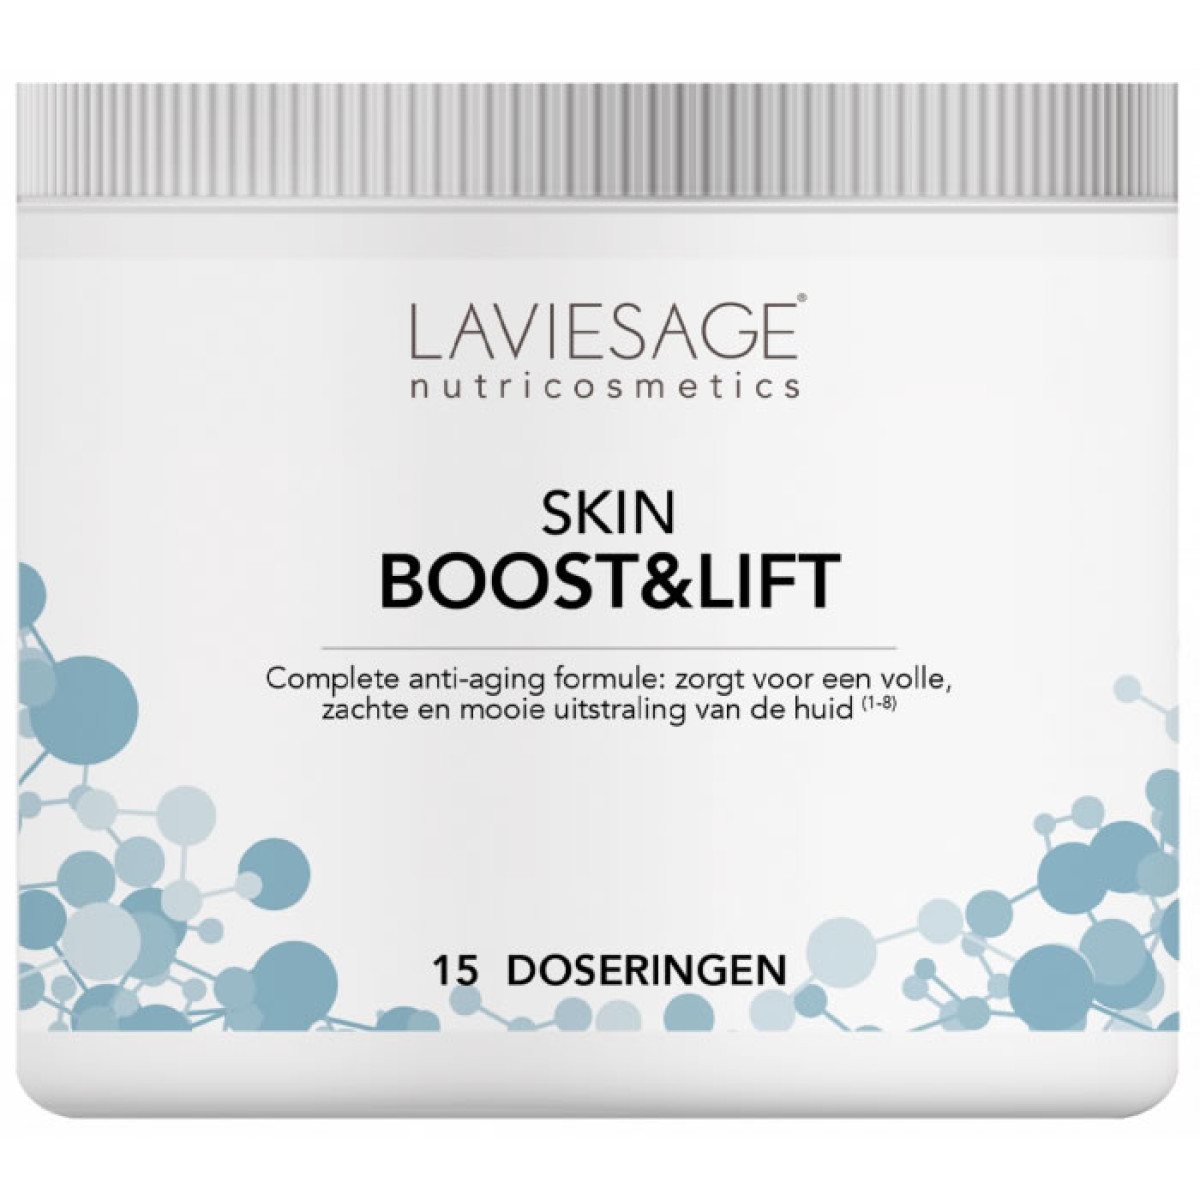 Laviesage_Skin_Boost_Lift_15doseringen